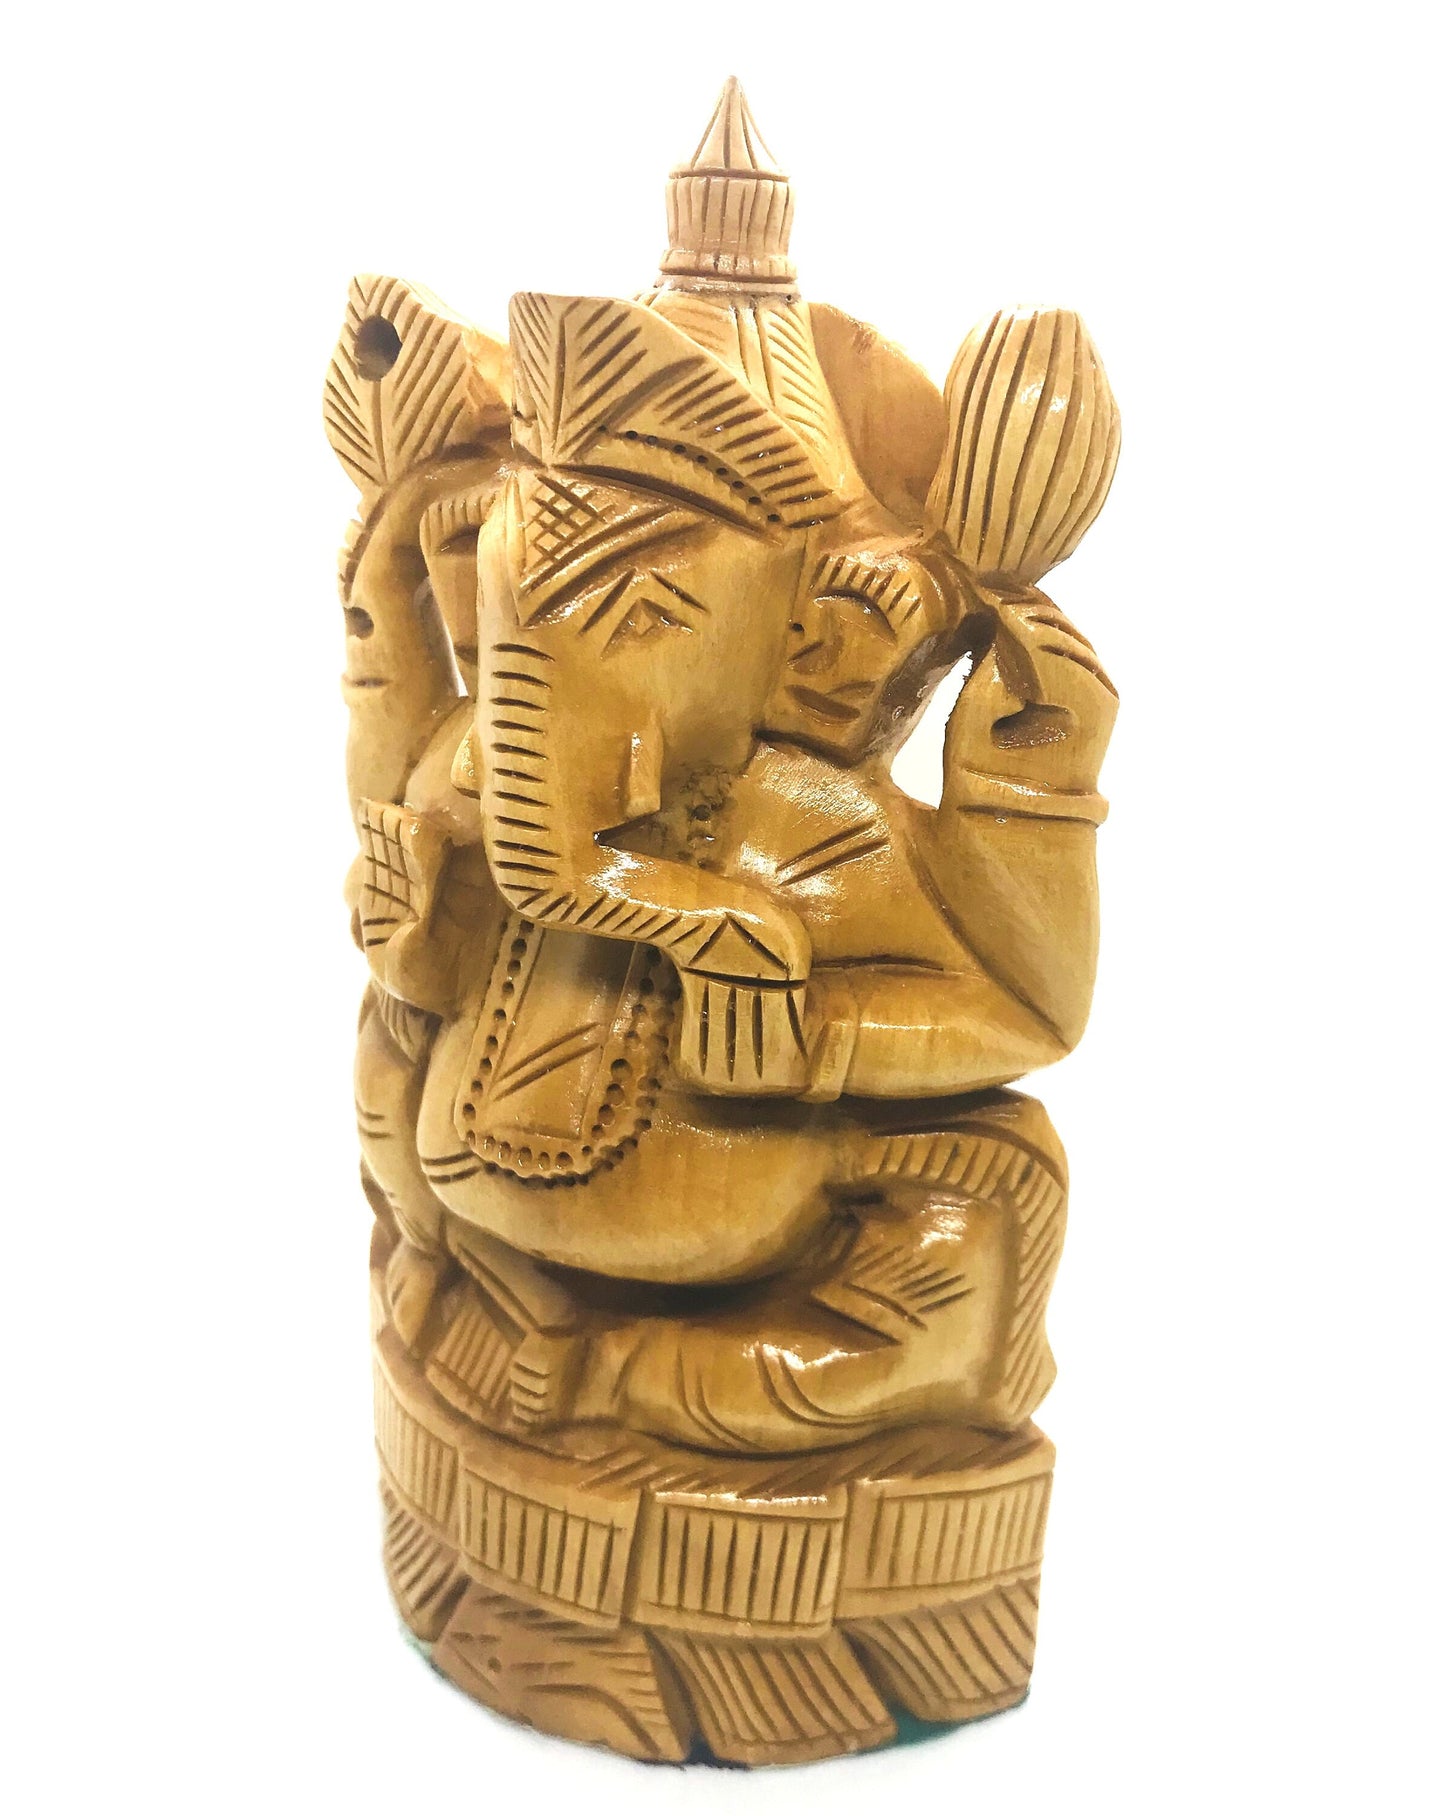 GANESHA Statue - Wooden Ganesh idol - GANPATI wooden hand carved 6 inches statue - Hindu Elephant God GANESH - good luck success prosperity